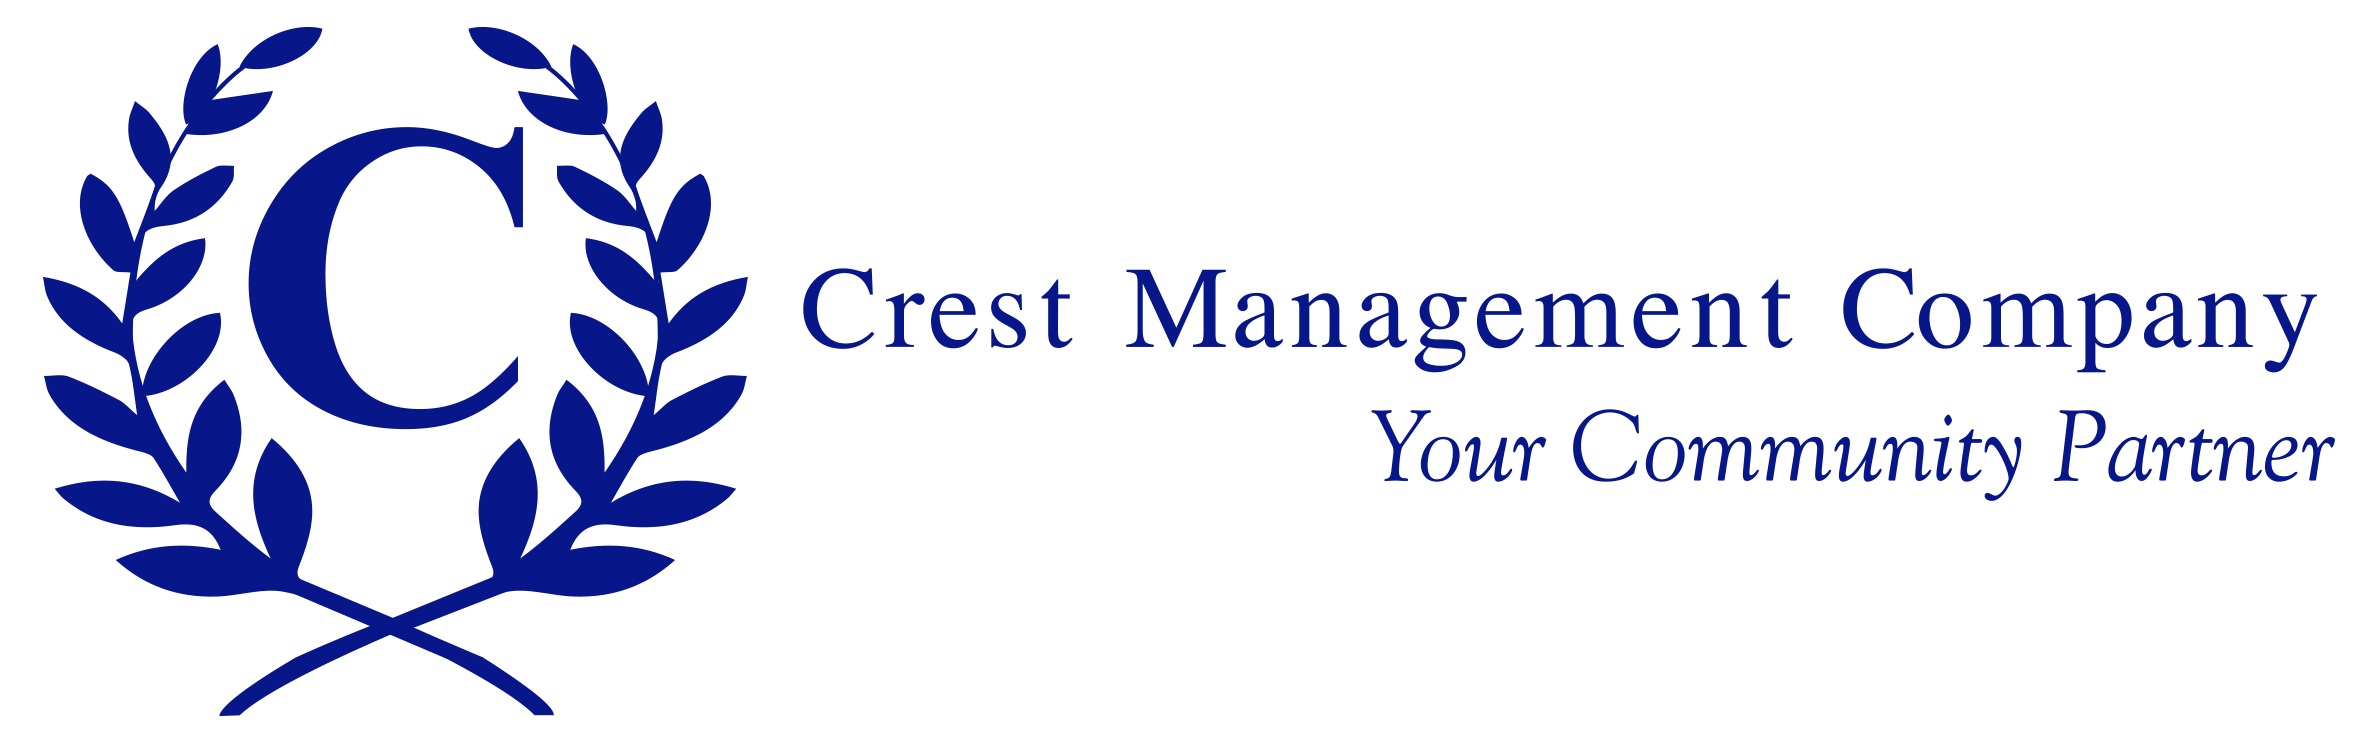 Crest Management Company, AAMC Company Logo